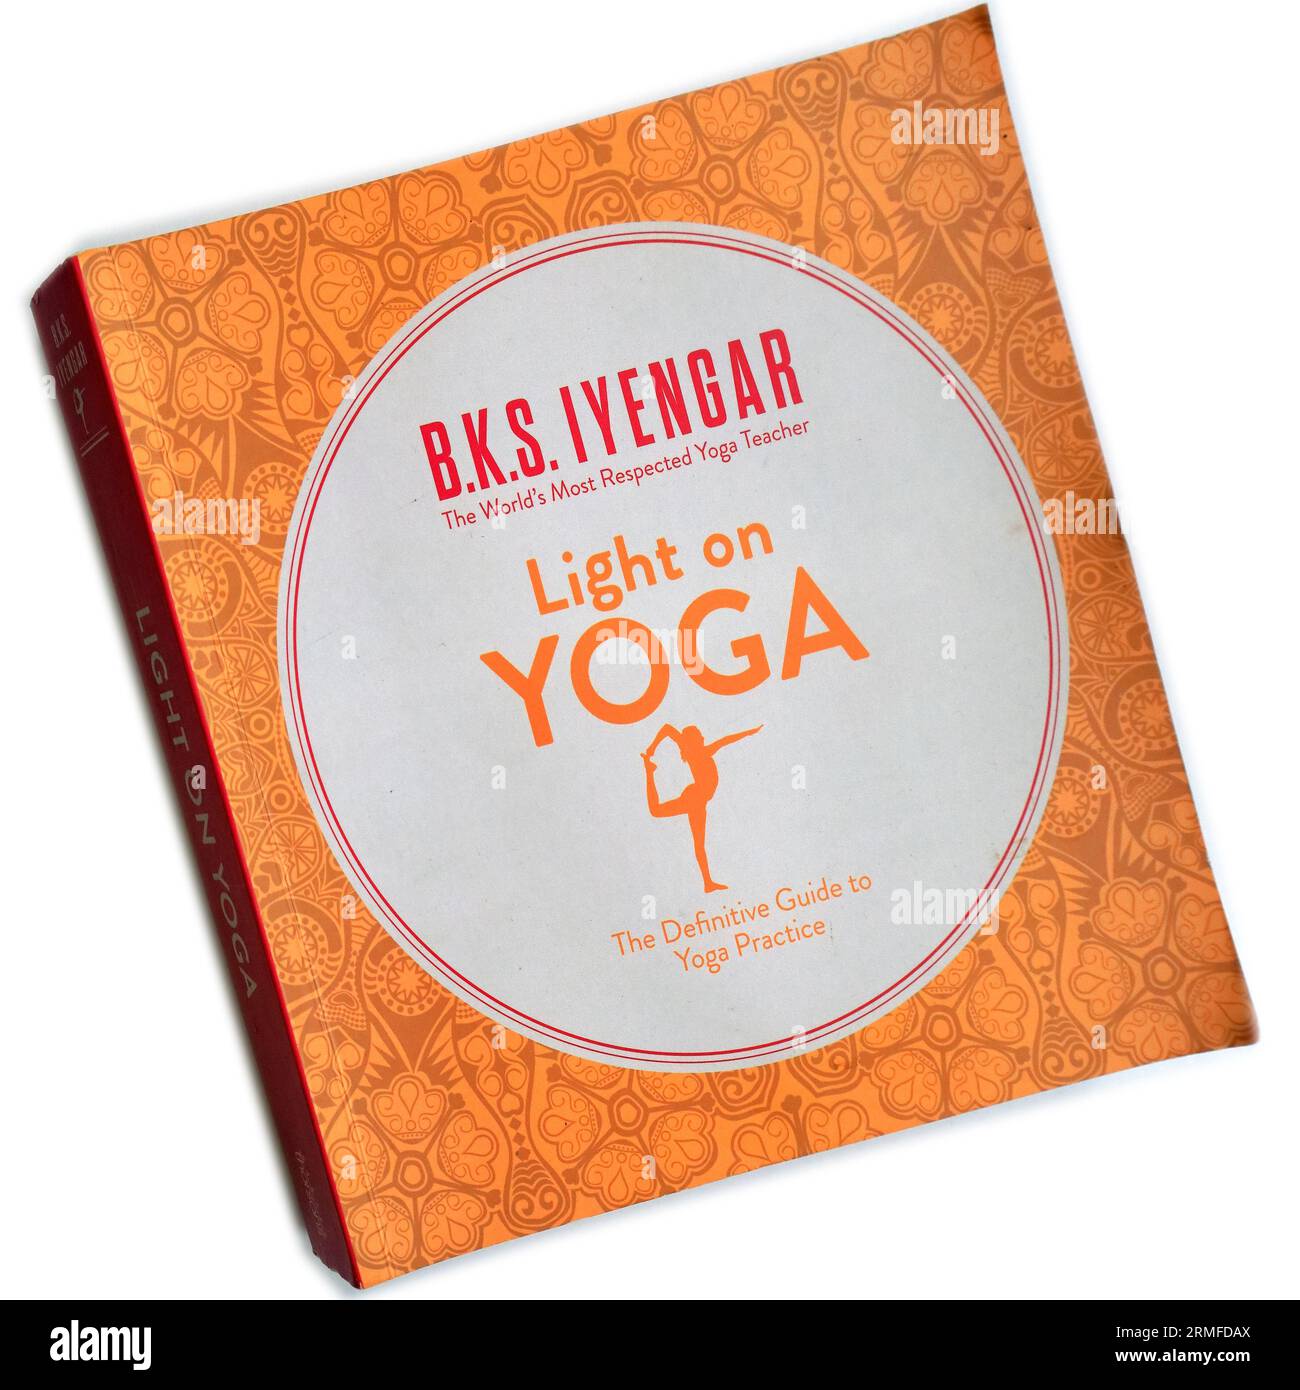 B.K.S. Iyengar - Light on Yoga - The definitive Guide to Yoga Practice. Copertina del libro su sfondo bianco Foto Stock